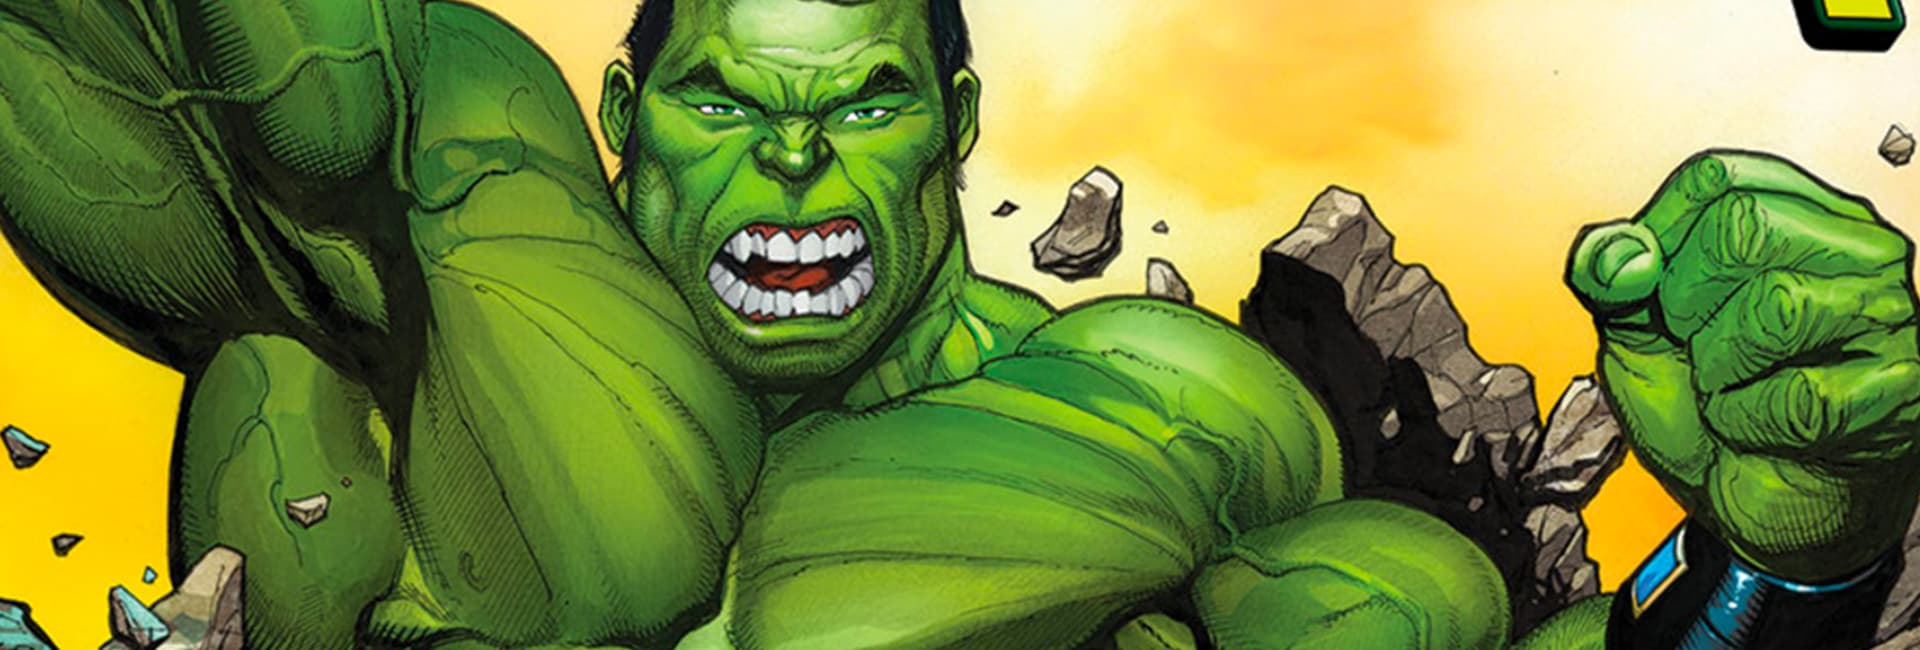 The All-New Incredible Hulk (Amadeus Cho)